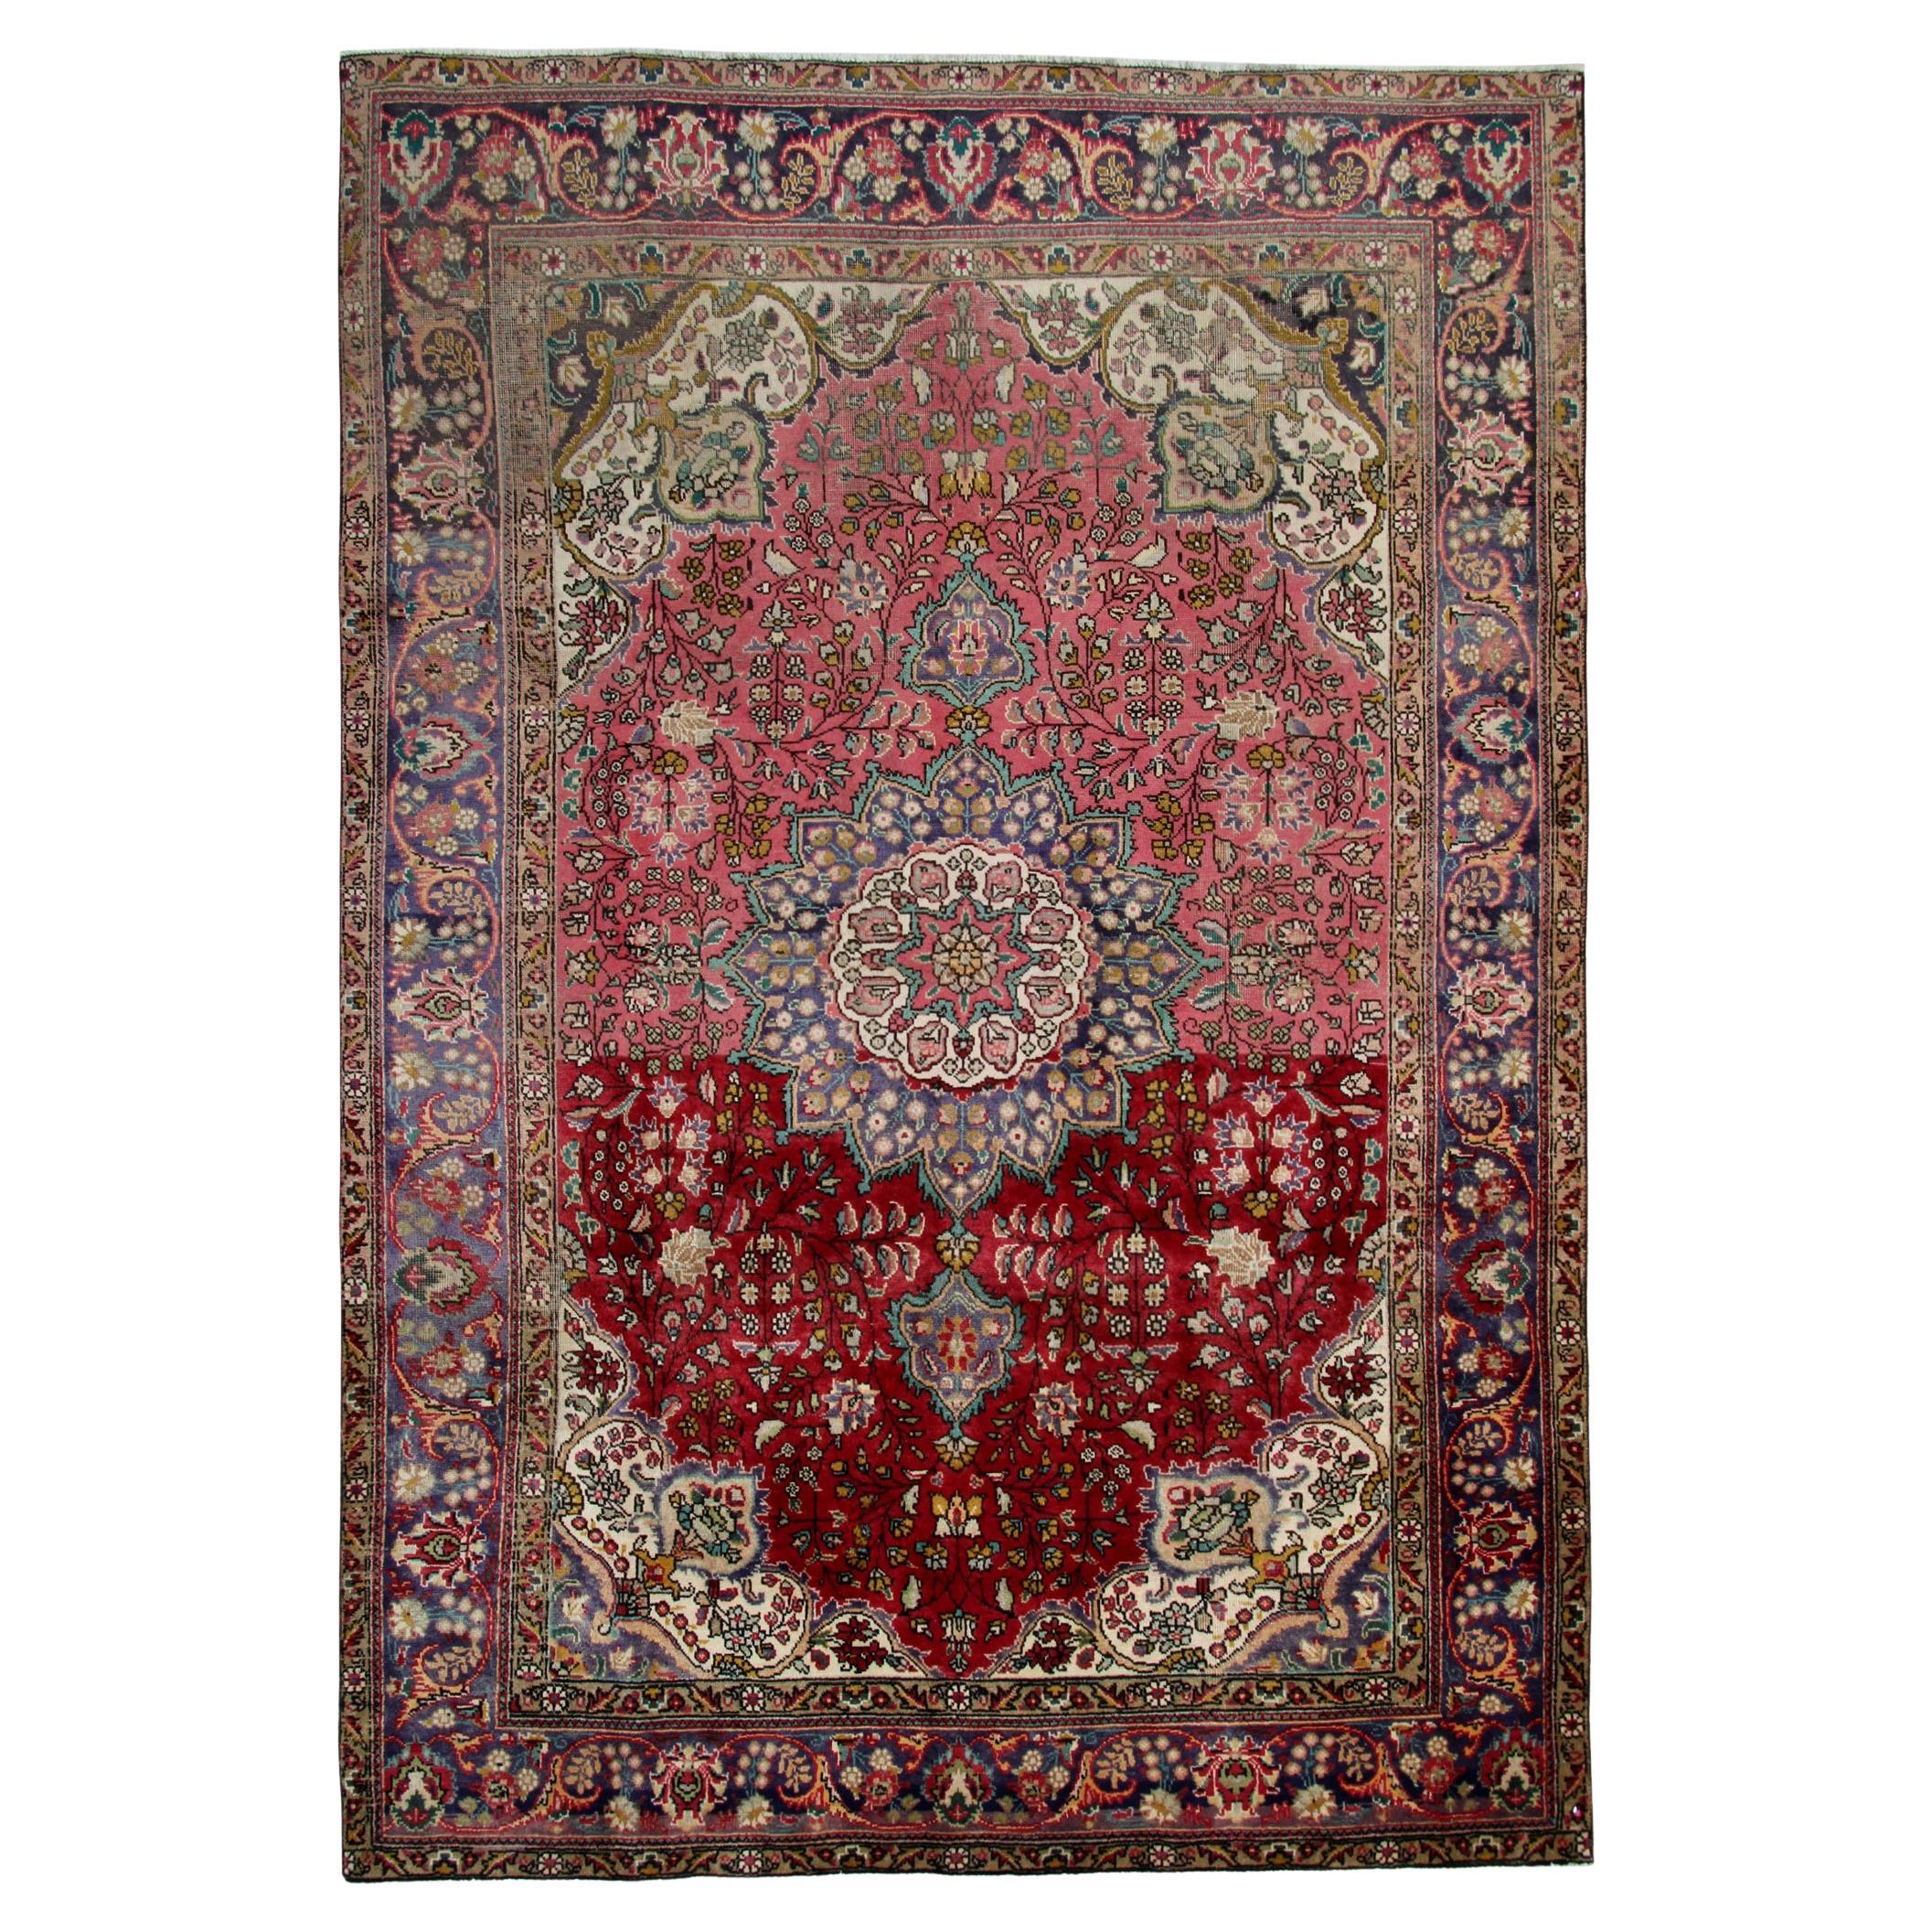 Large Vintage Carpet Red Rug Handmade Oriental Livingroom Carpet